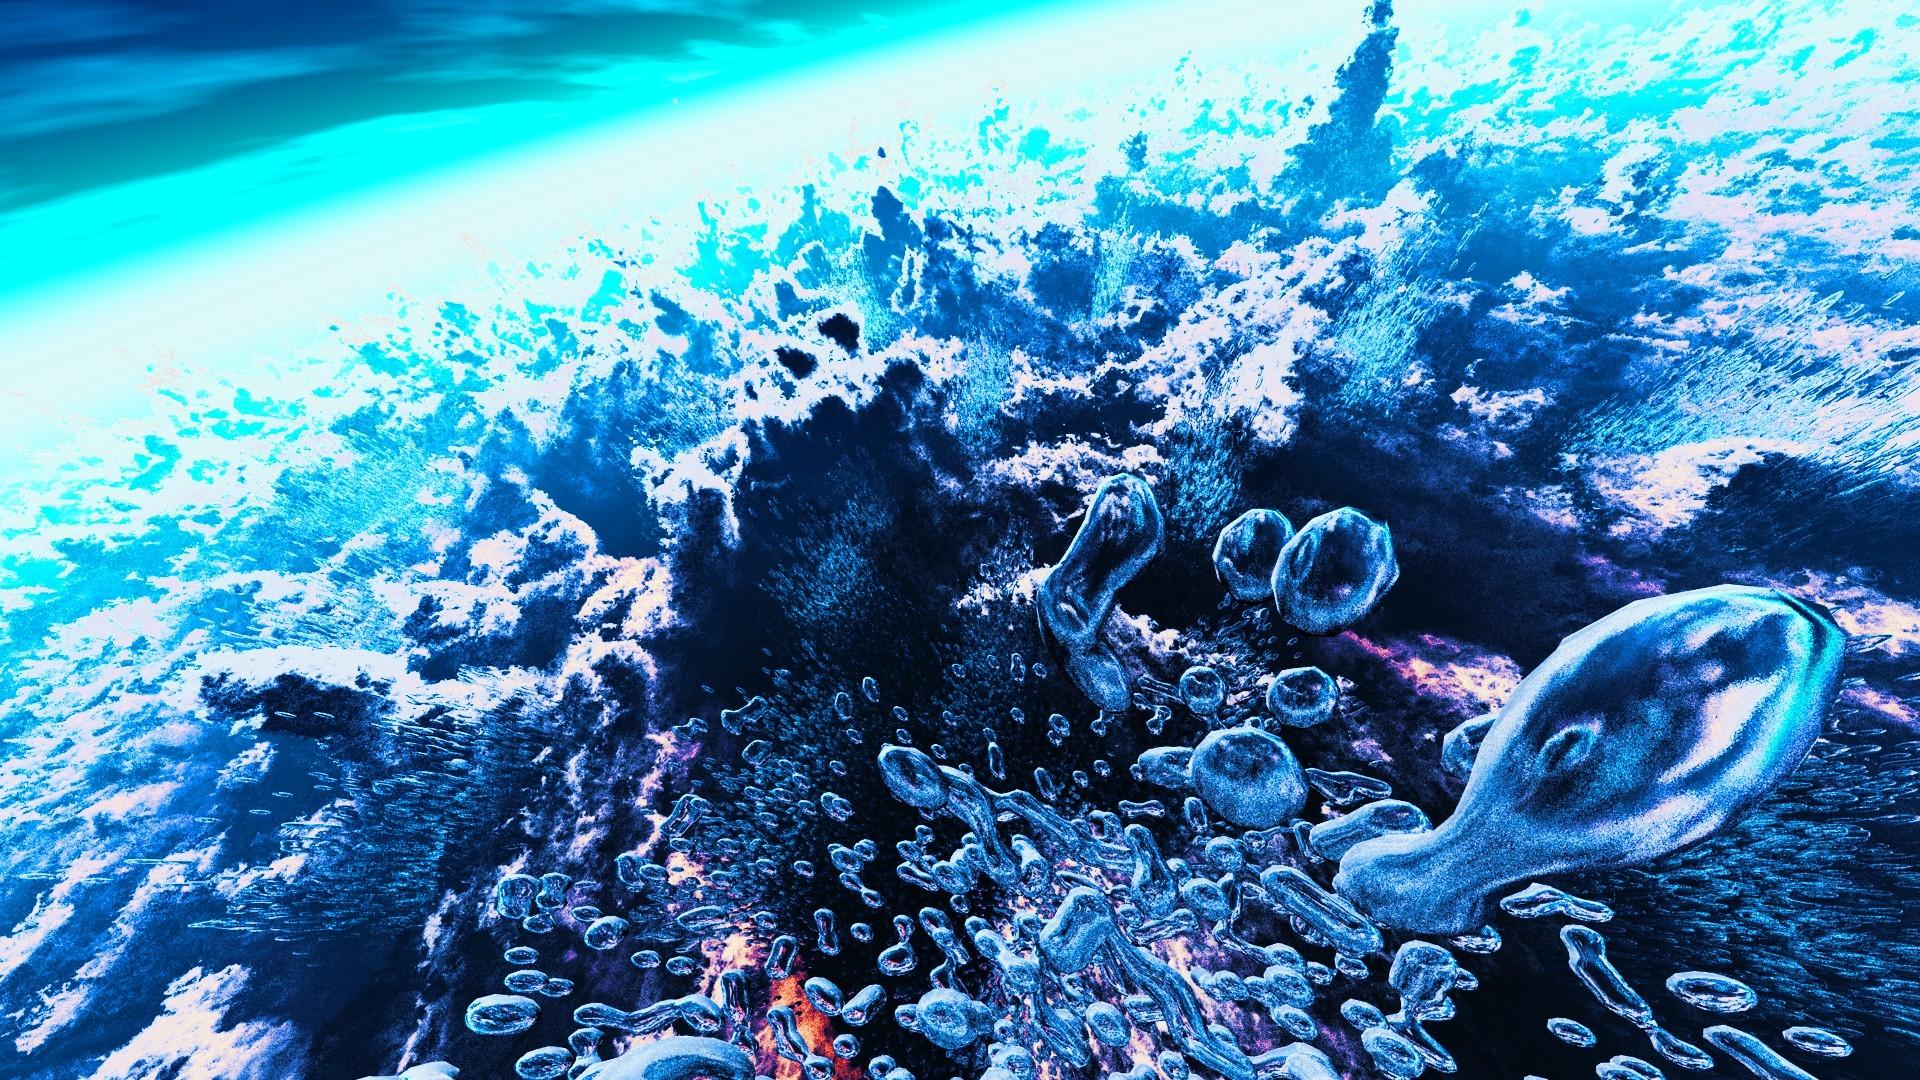 Water bubbles coraline scenic digital art sky corals wallpaper ...